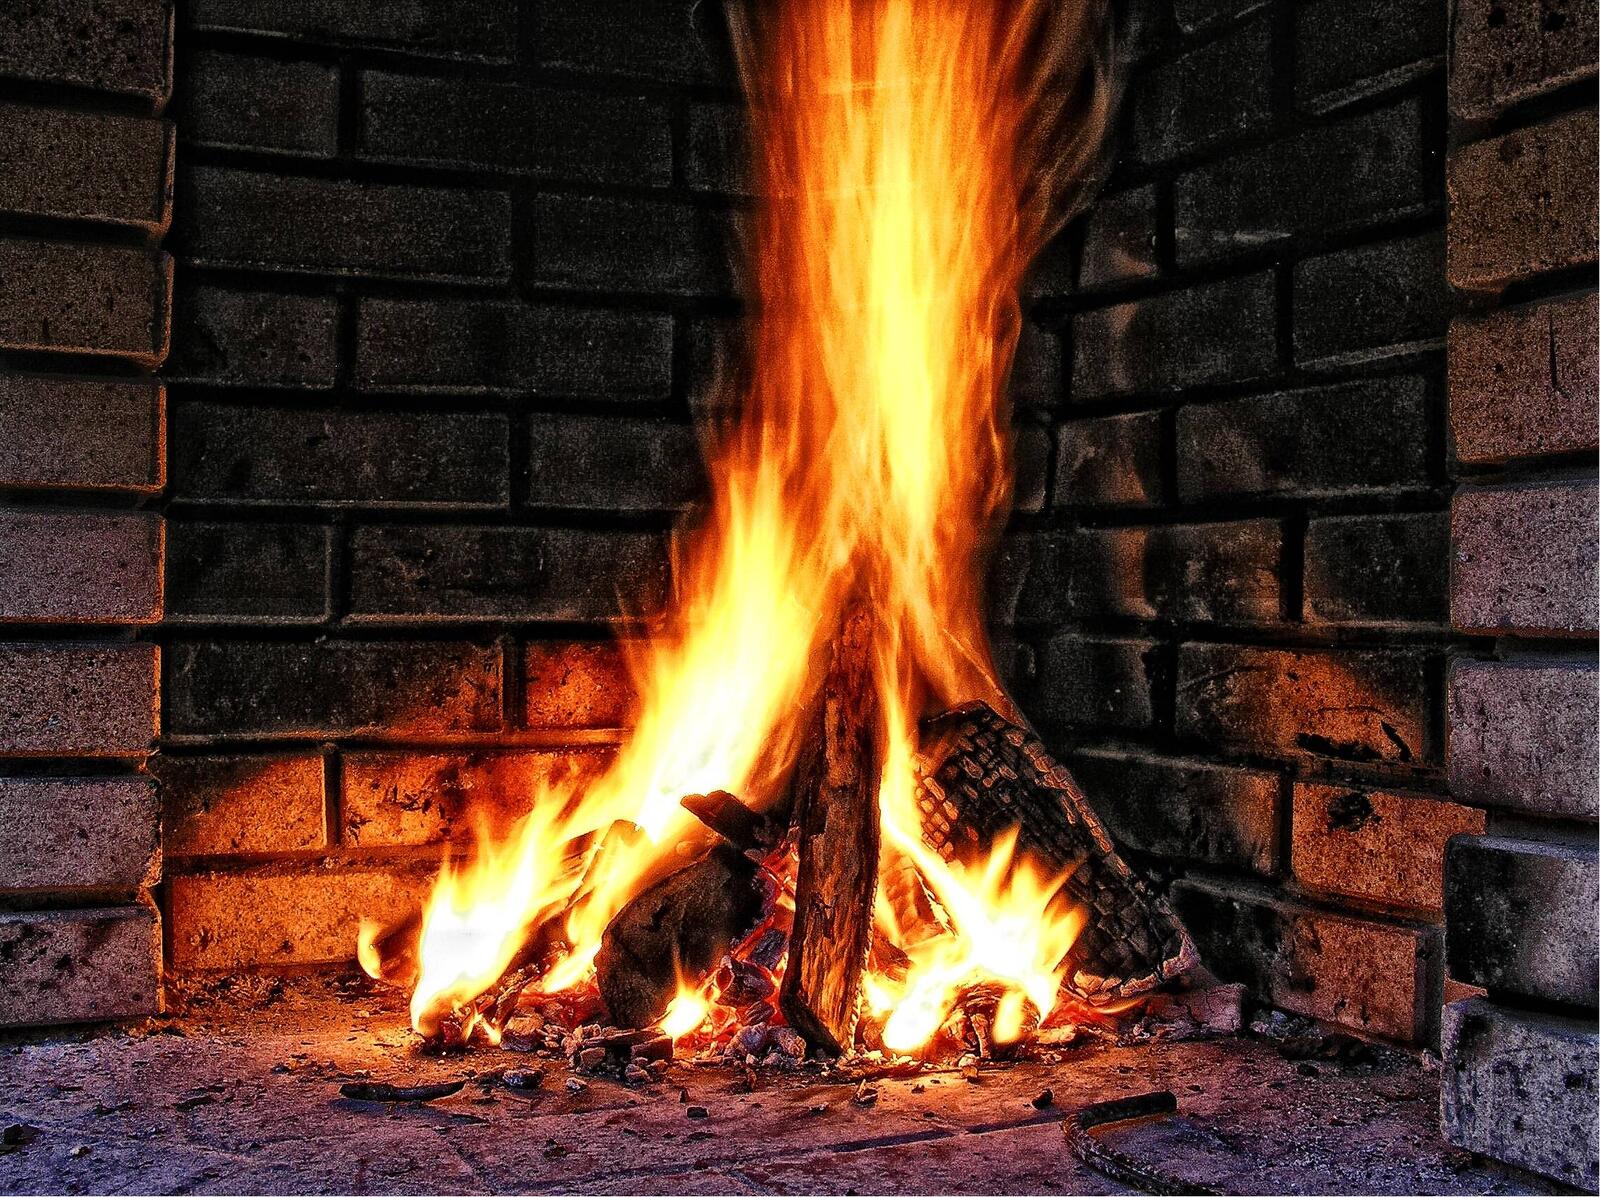 Wallpapers firewood stove coals on the desktop